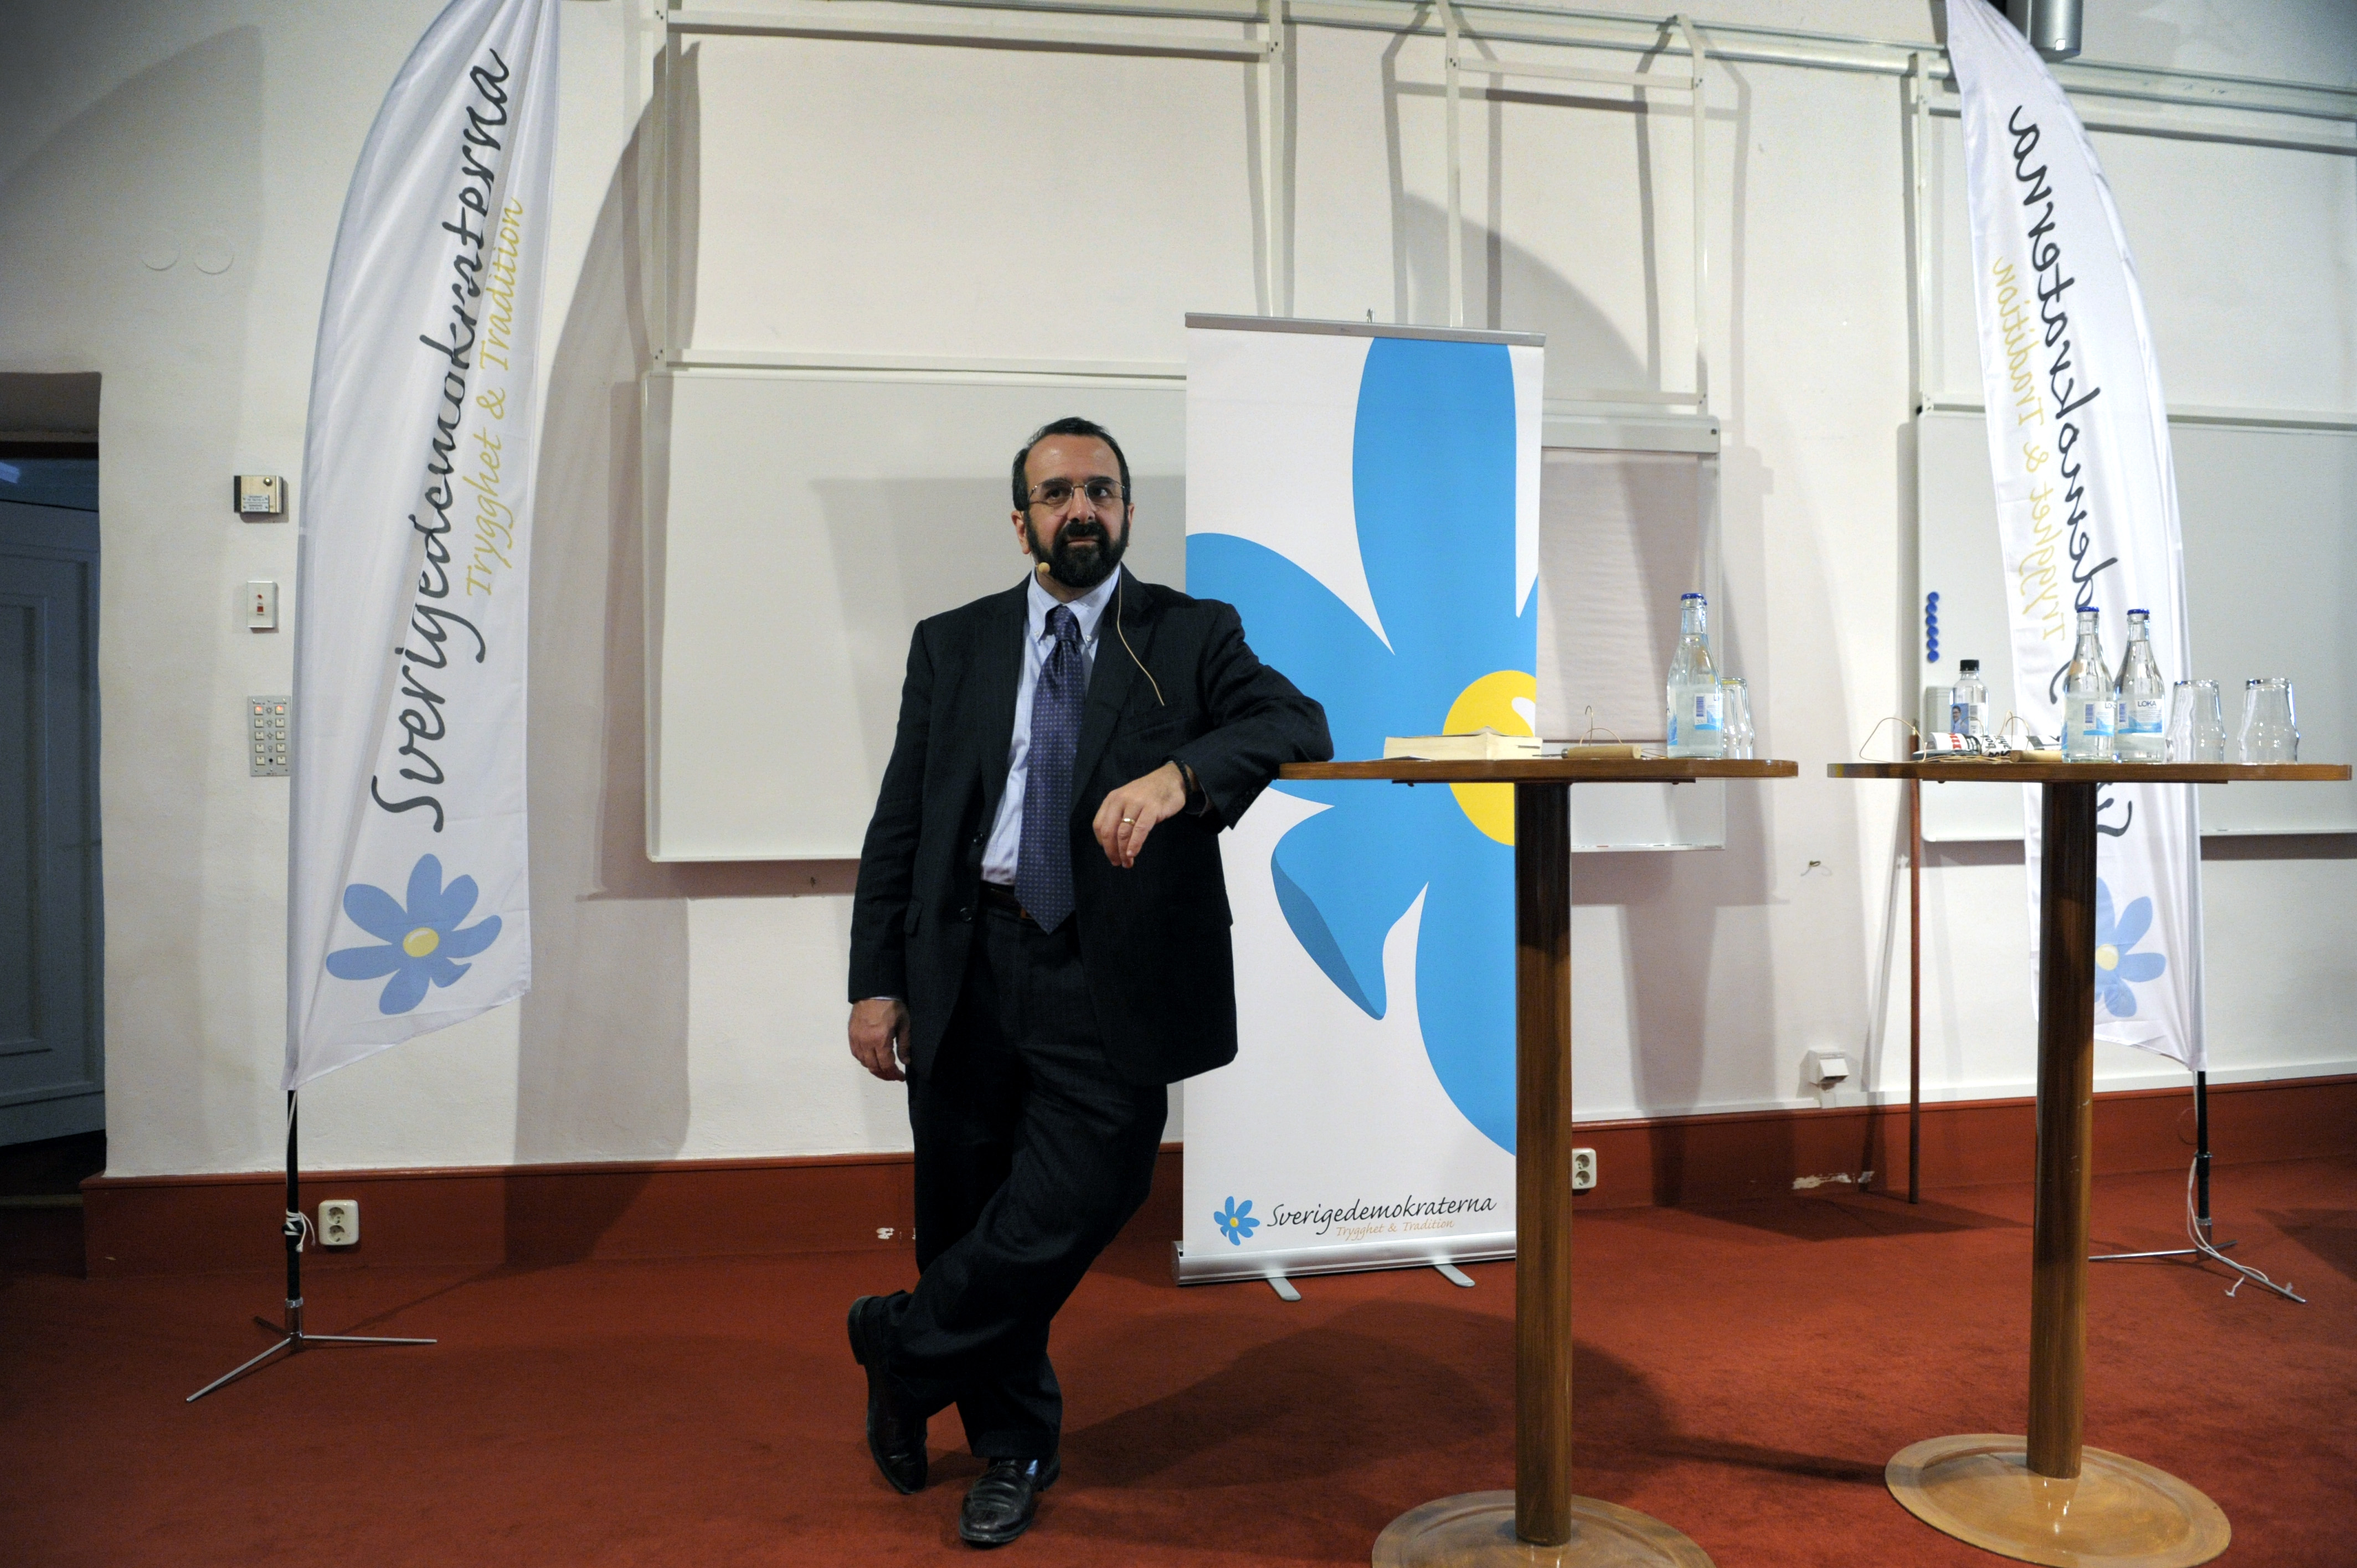 Riksdagsvalet 2010, Almedalen, Robert Spencer, Sverigedemokraterna, Islam